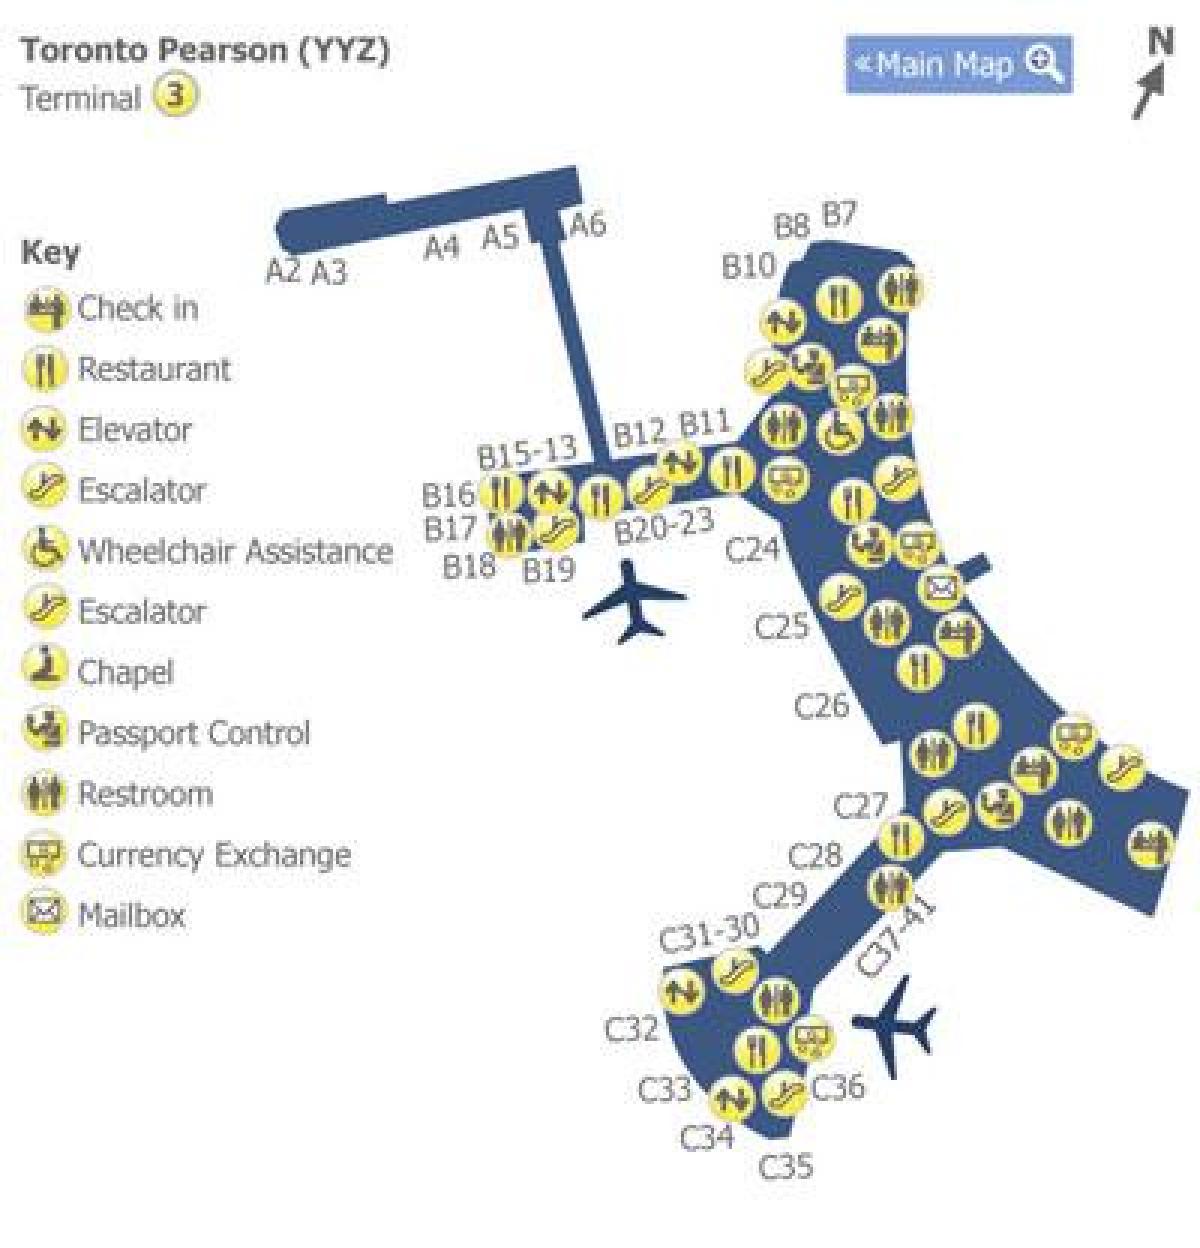 Peta dari Toronto Pearson airport terminal 3